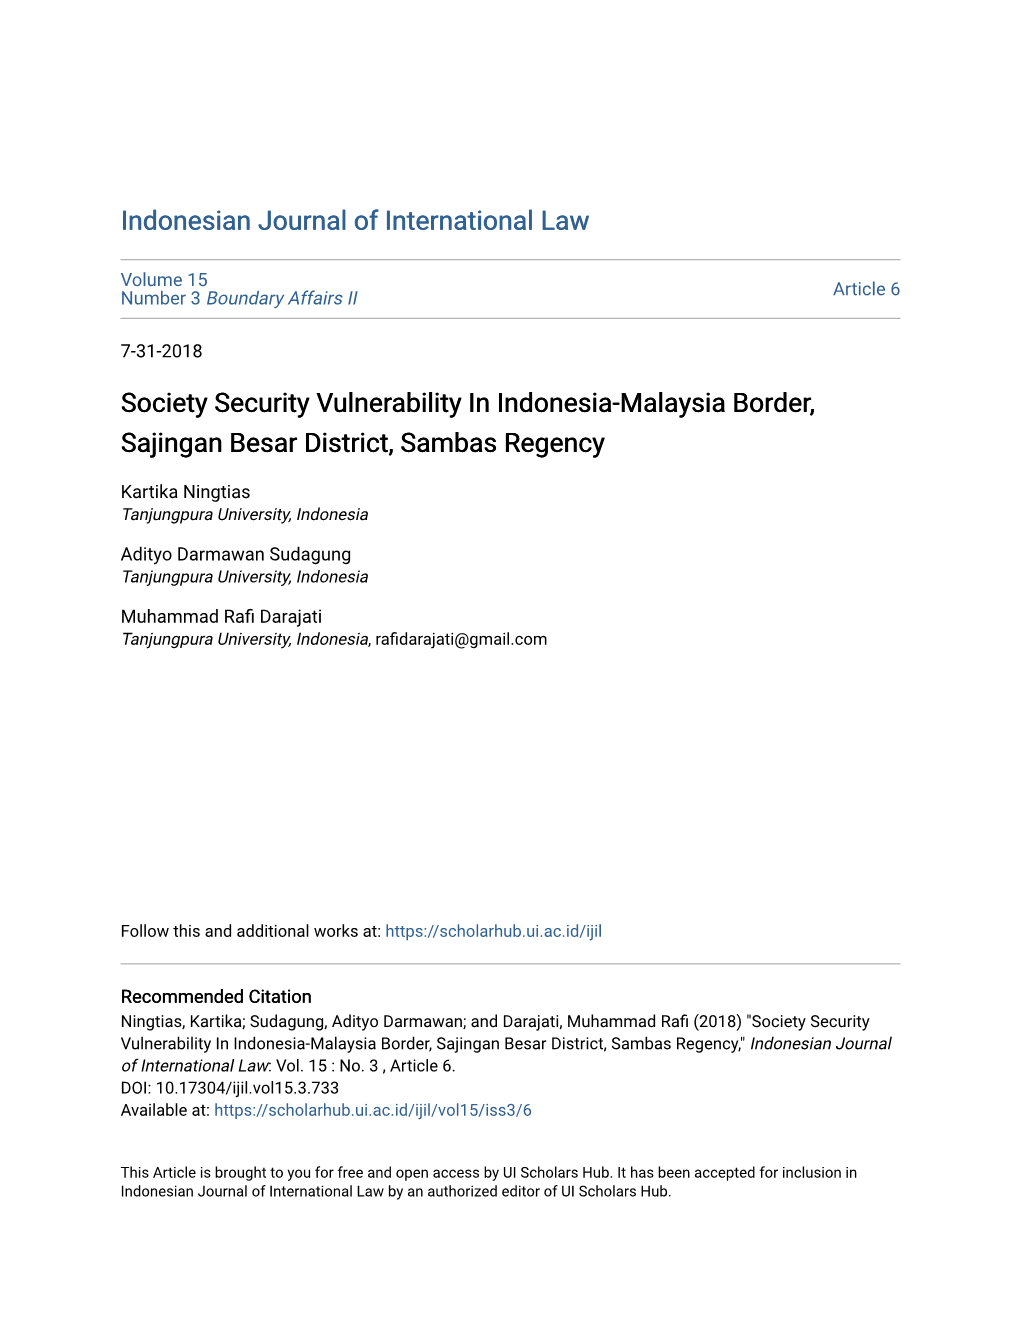 Society Security Vulnerability in Indonesia-Malaysia Border, Sajingan Besar District, Sambas Regency